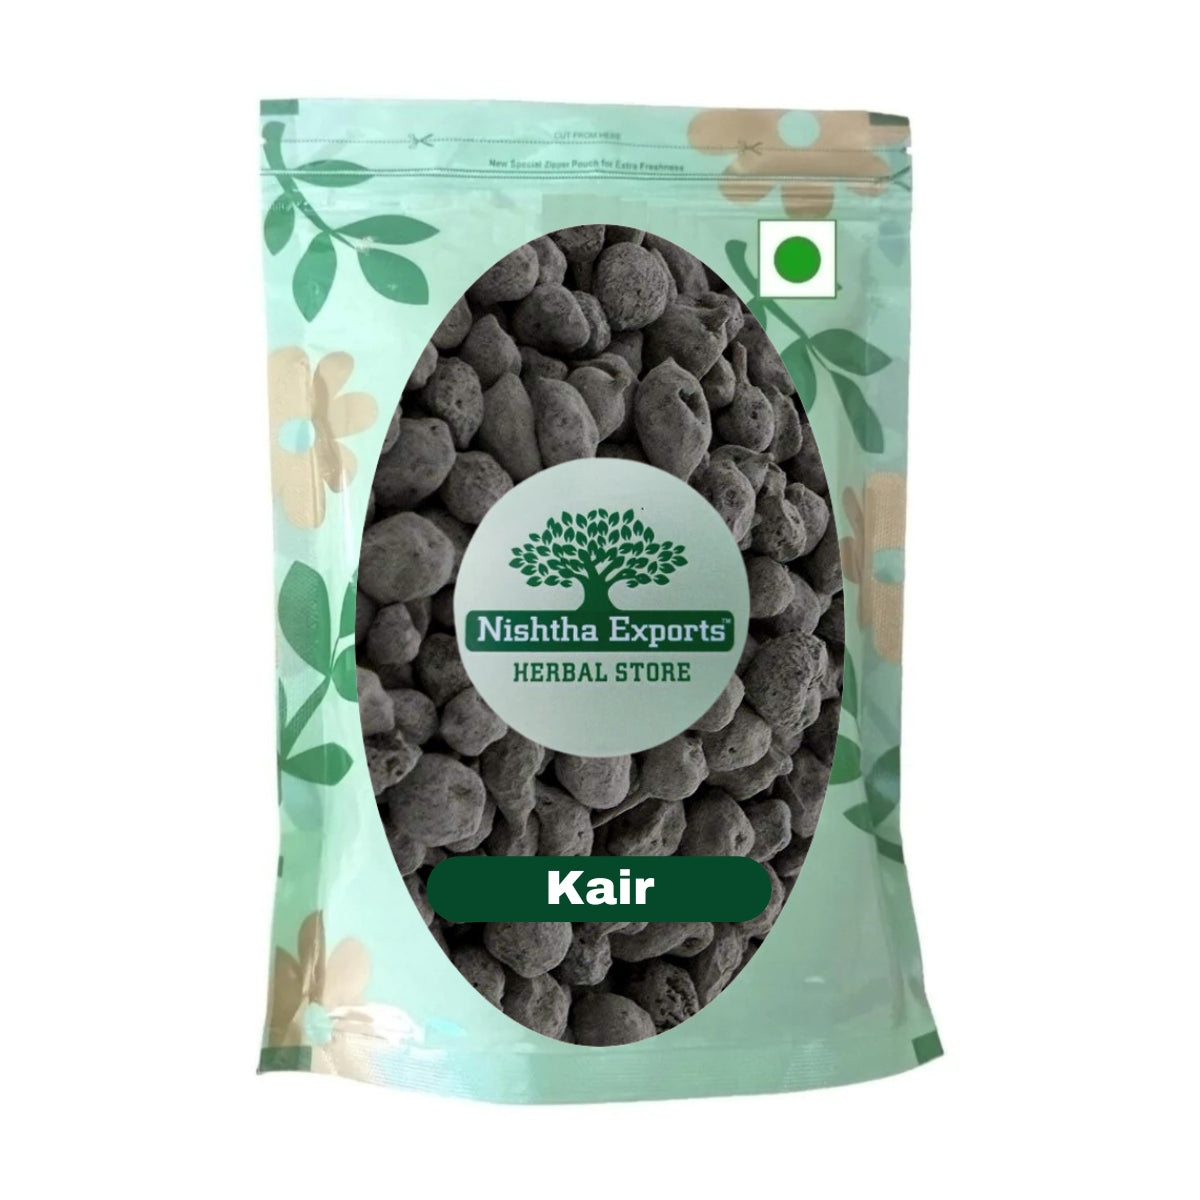 Kair-Capparis decidua-कैर-Dried Desert Beans-Ker-Desert Berry-Grocery